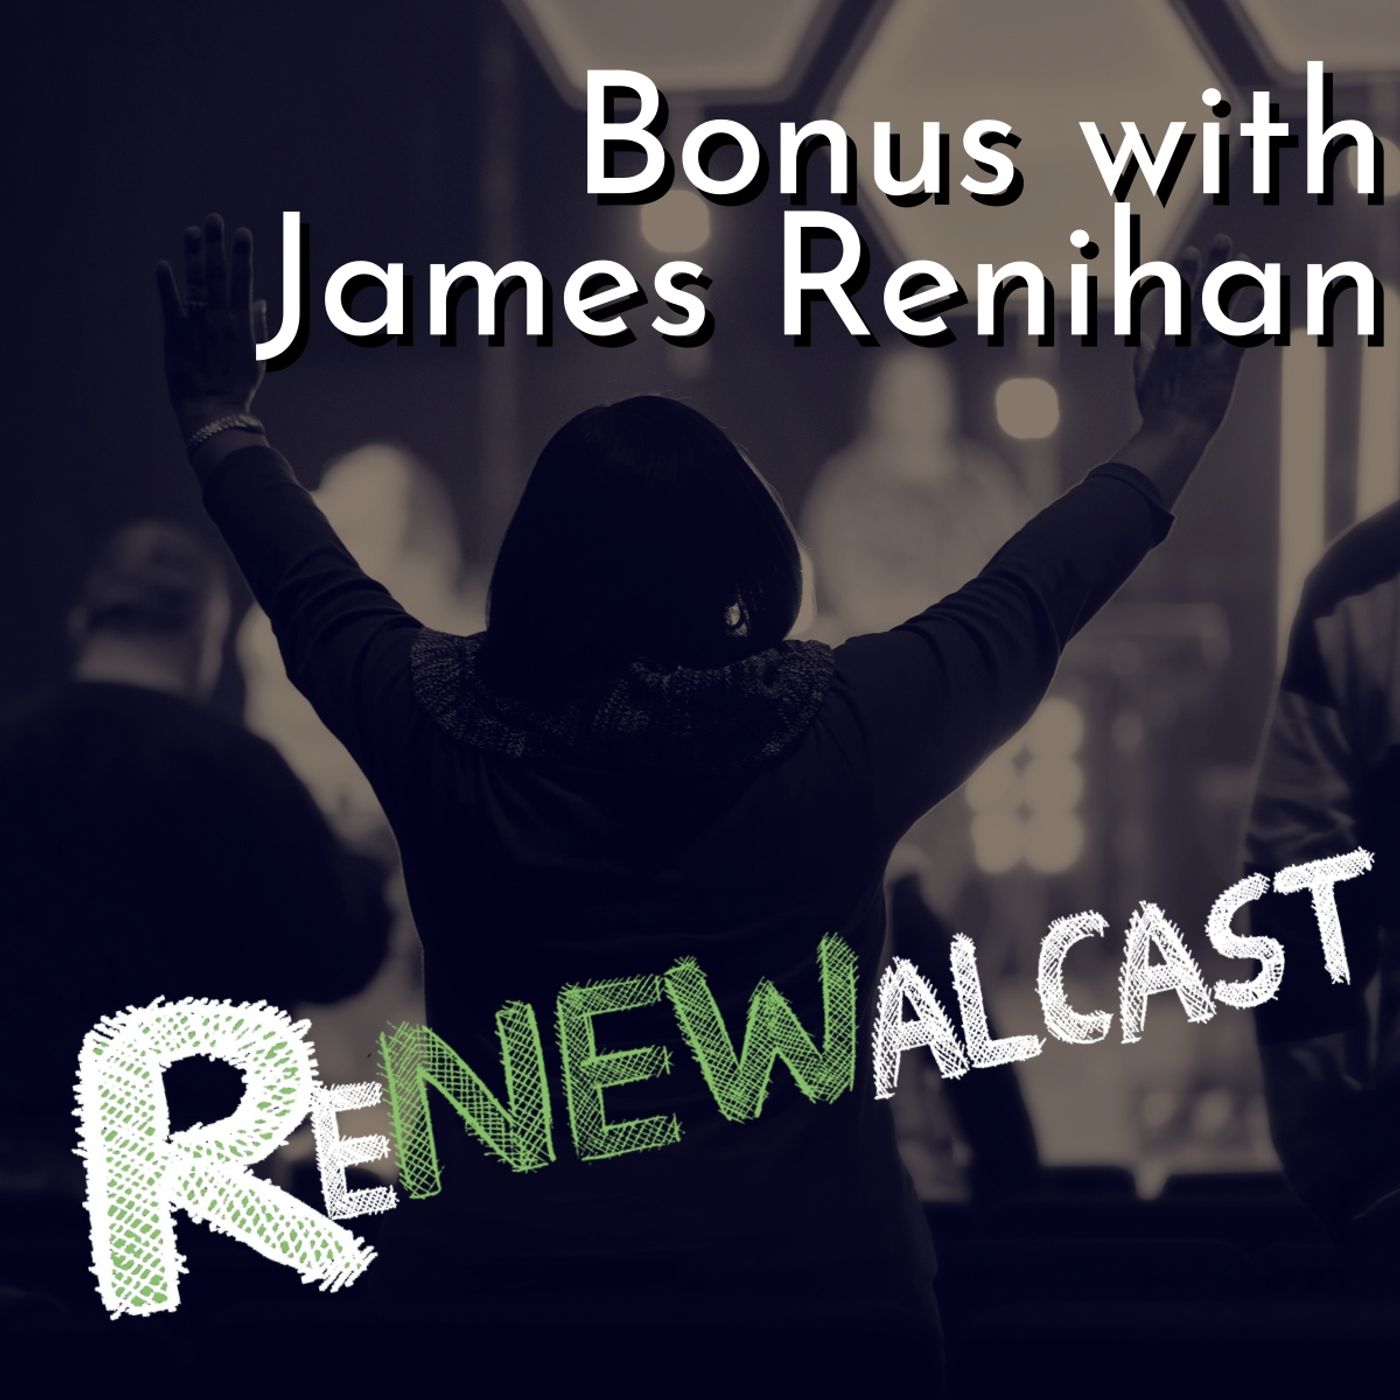 Bonus with James Renihan